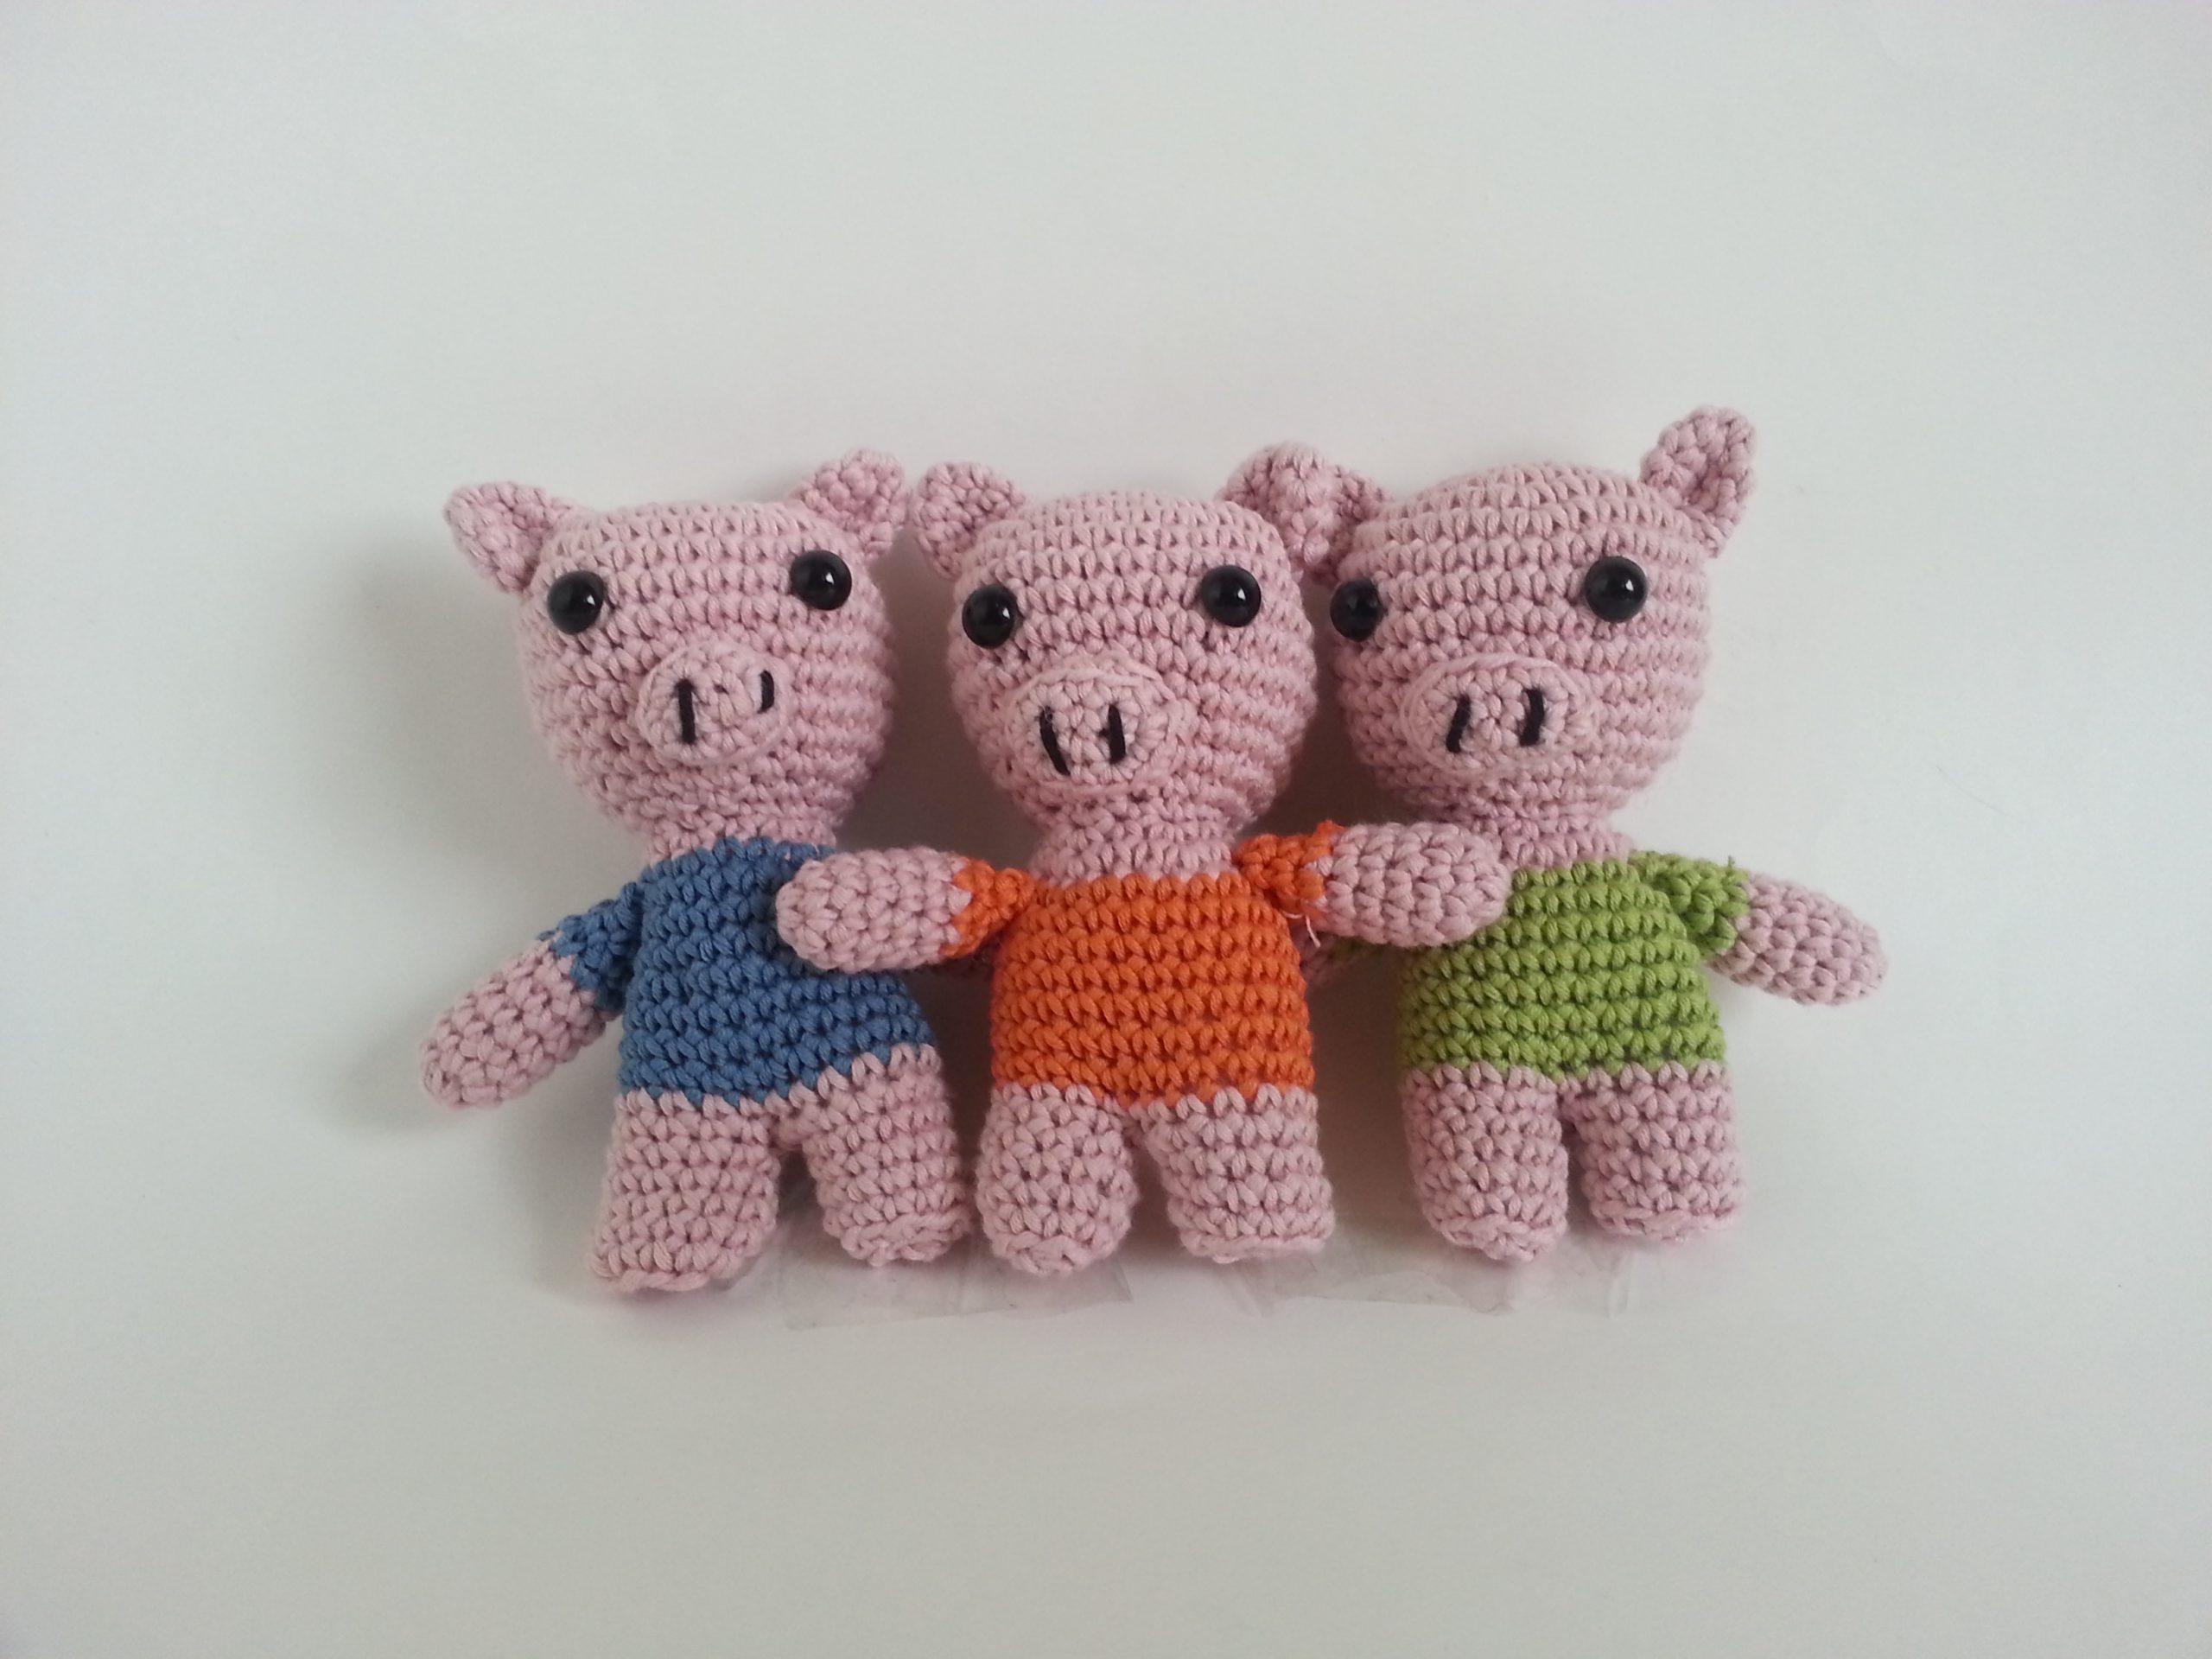 three little pigs amigurumi free crochet pattern with video tutorial